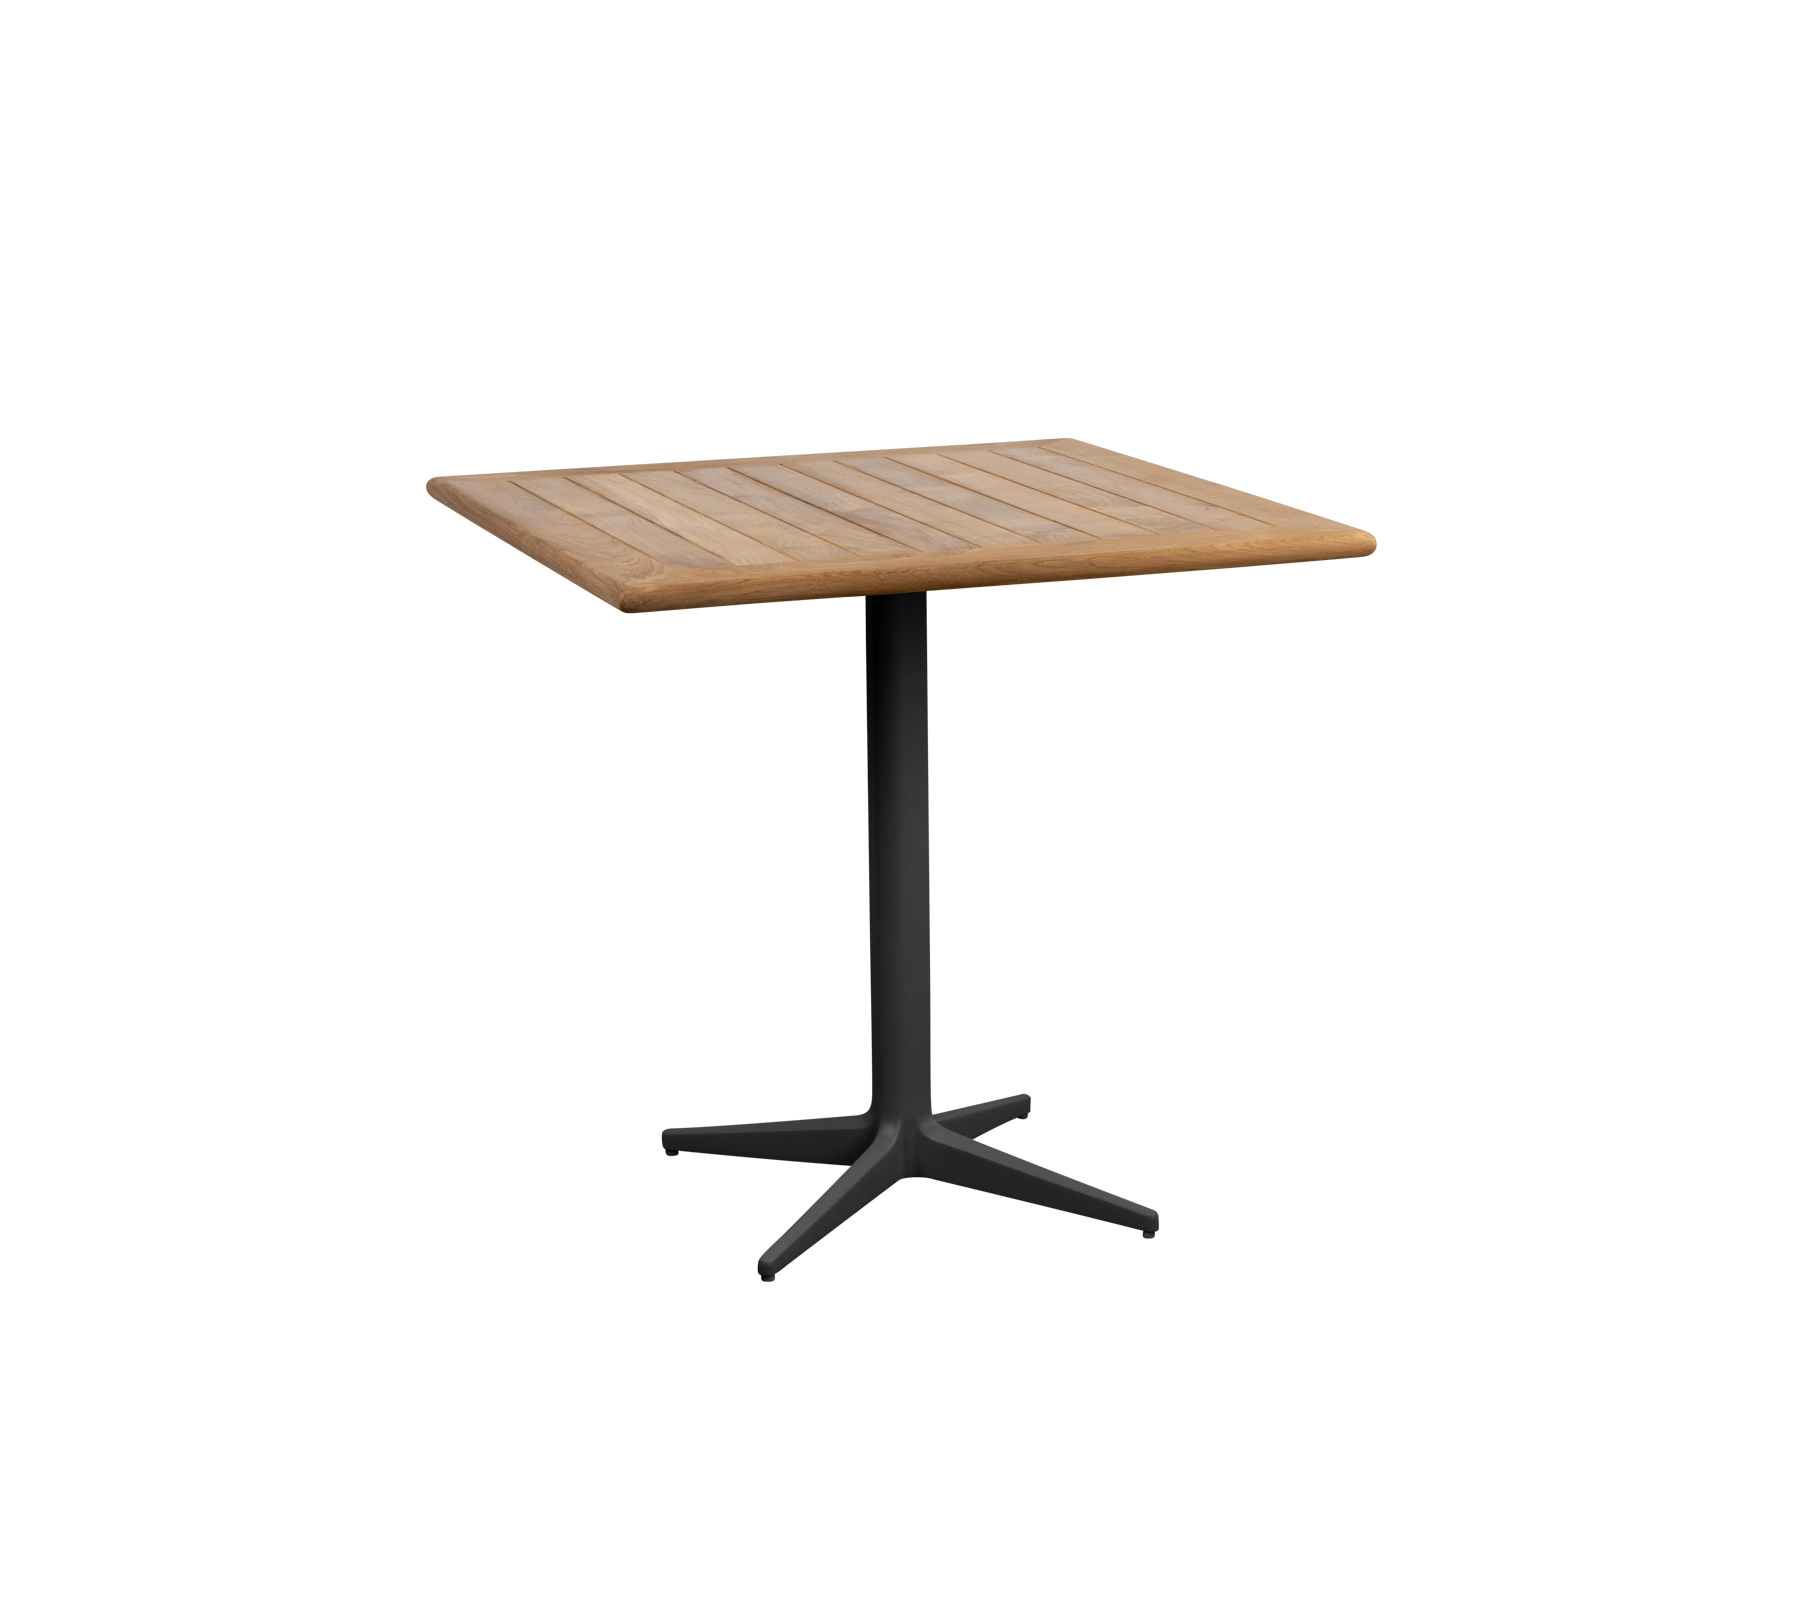 Drop table 72x72 cm